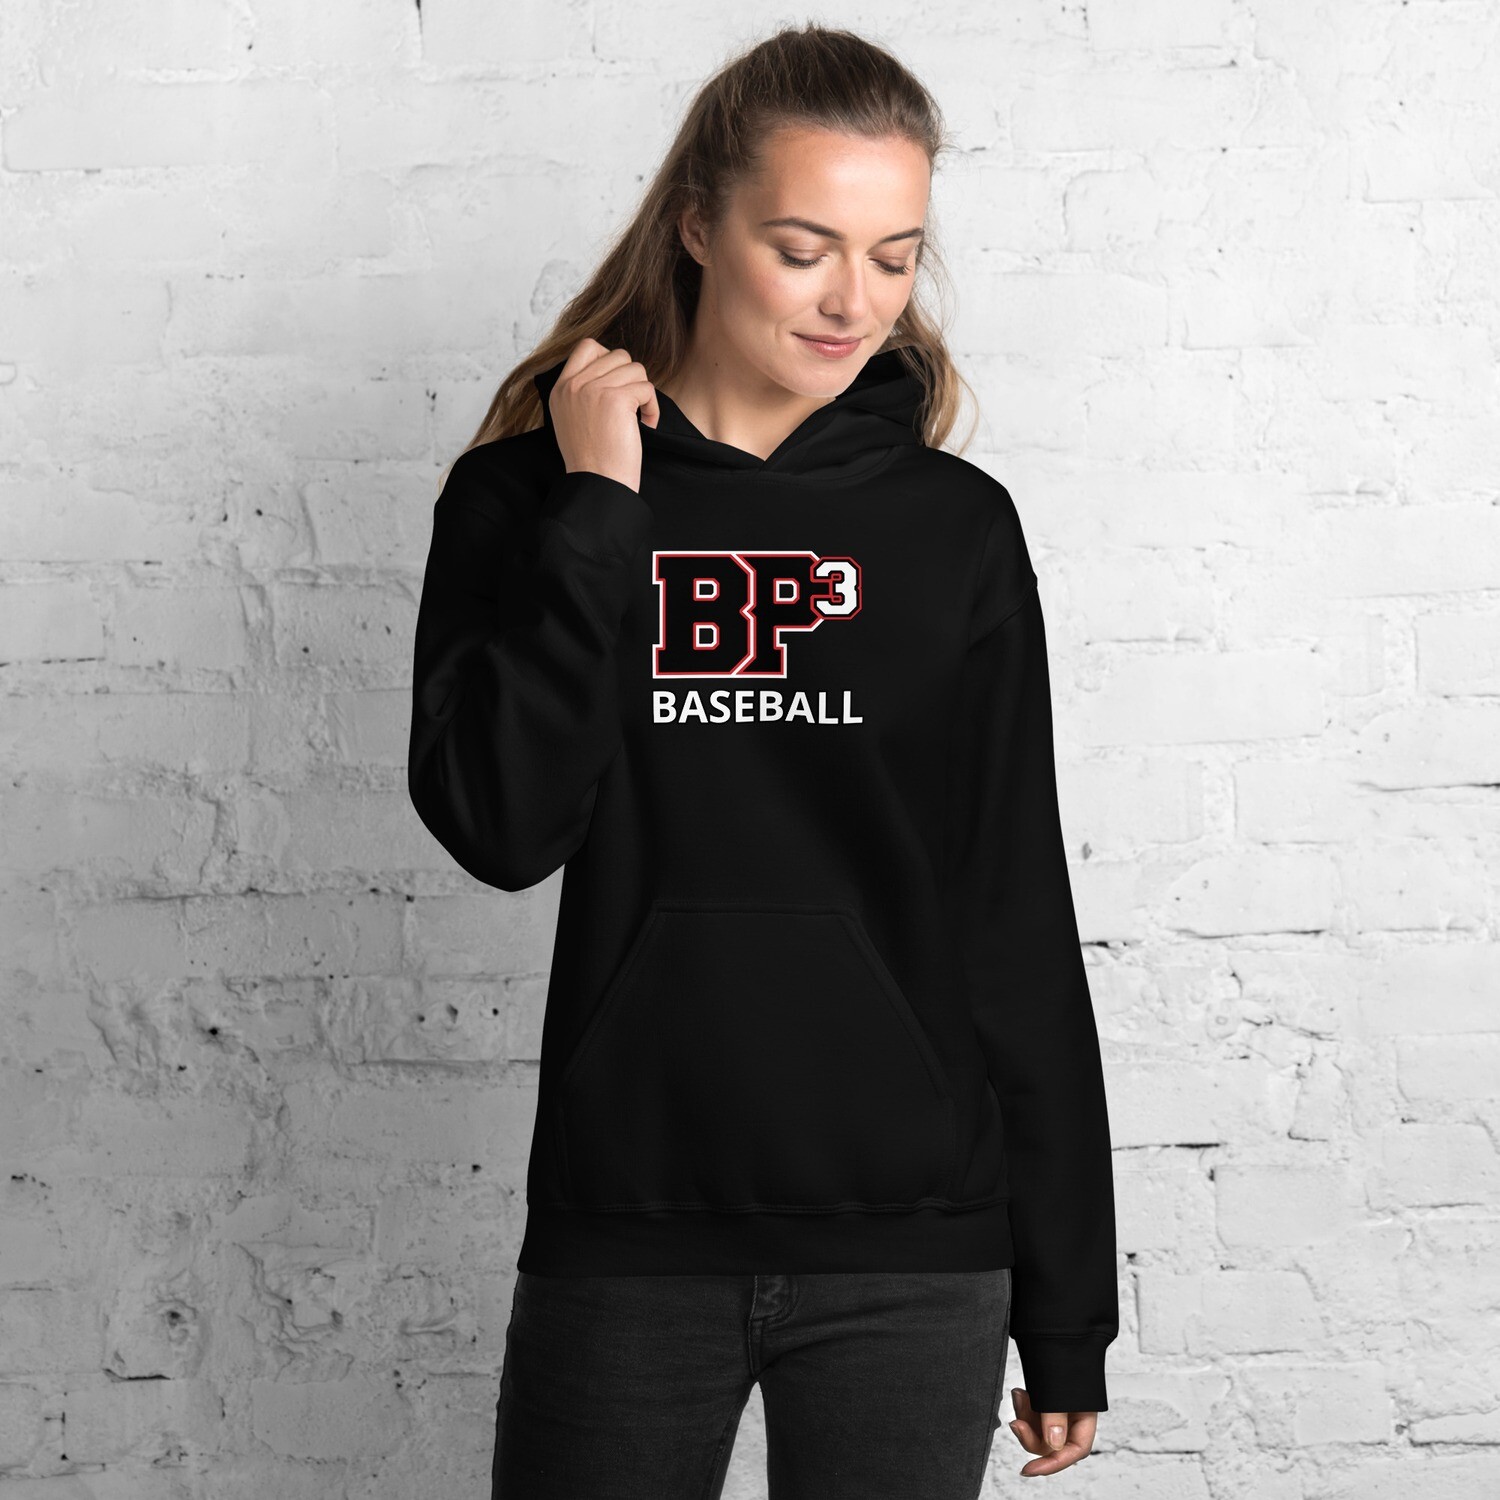 BP3 Baseball Women’s Hoodie